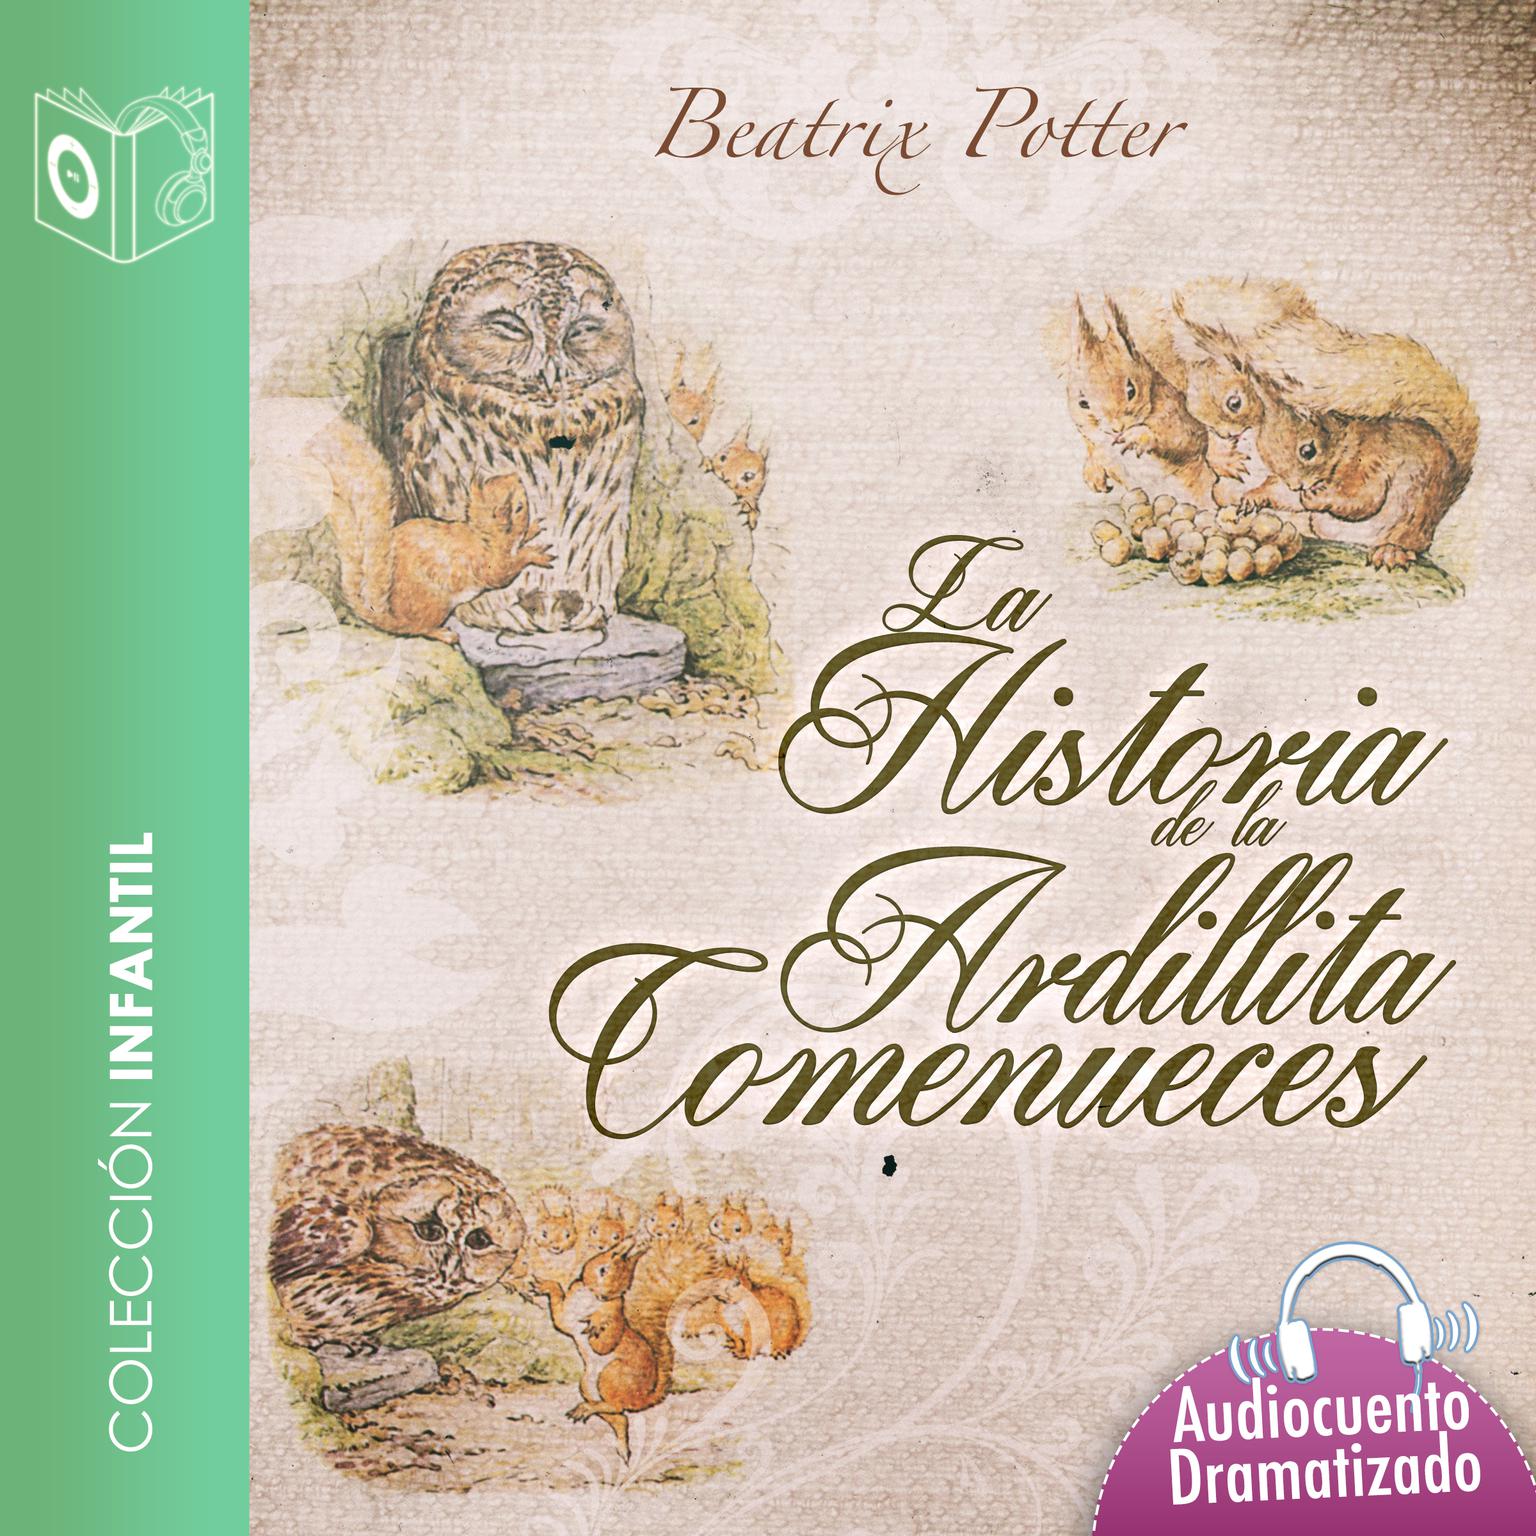 Historia de la ardillita Comenueces Audiobook, by Beatrix Potter